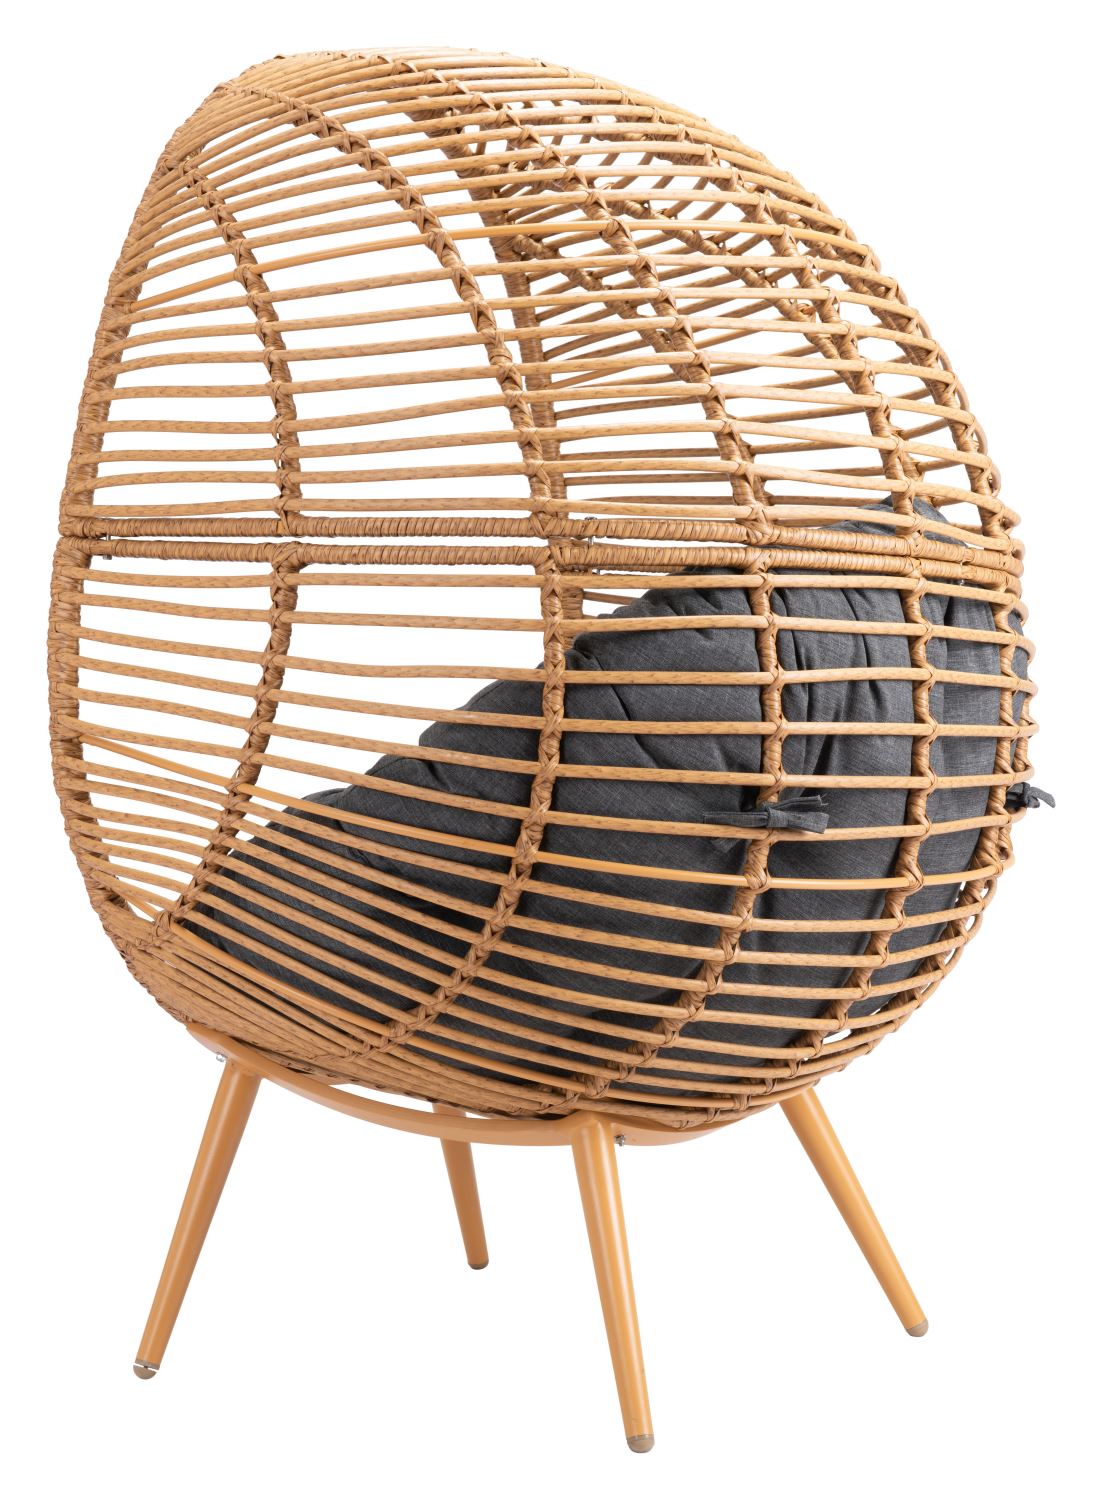 Petta Outdoor Egg Chair - Natural/Grey